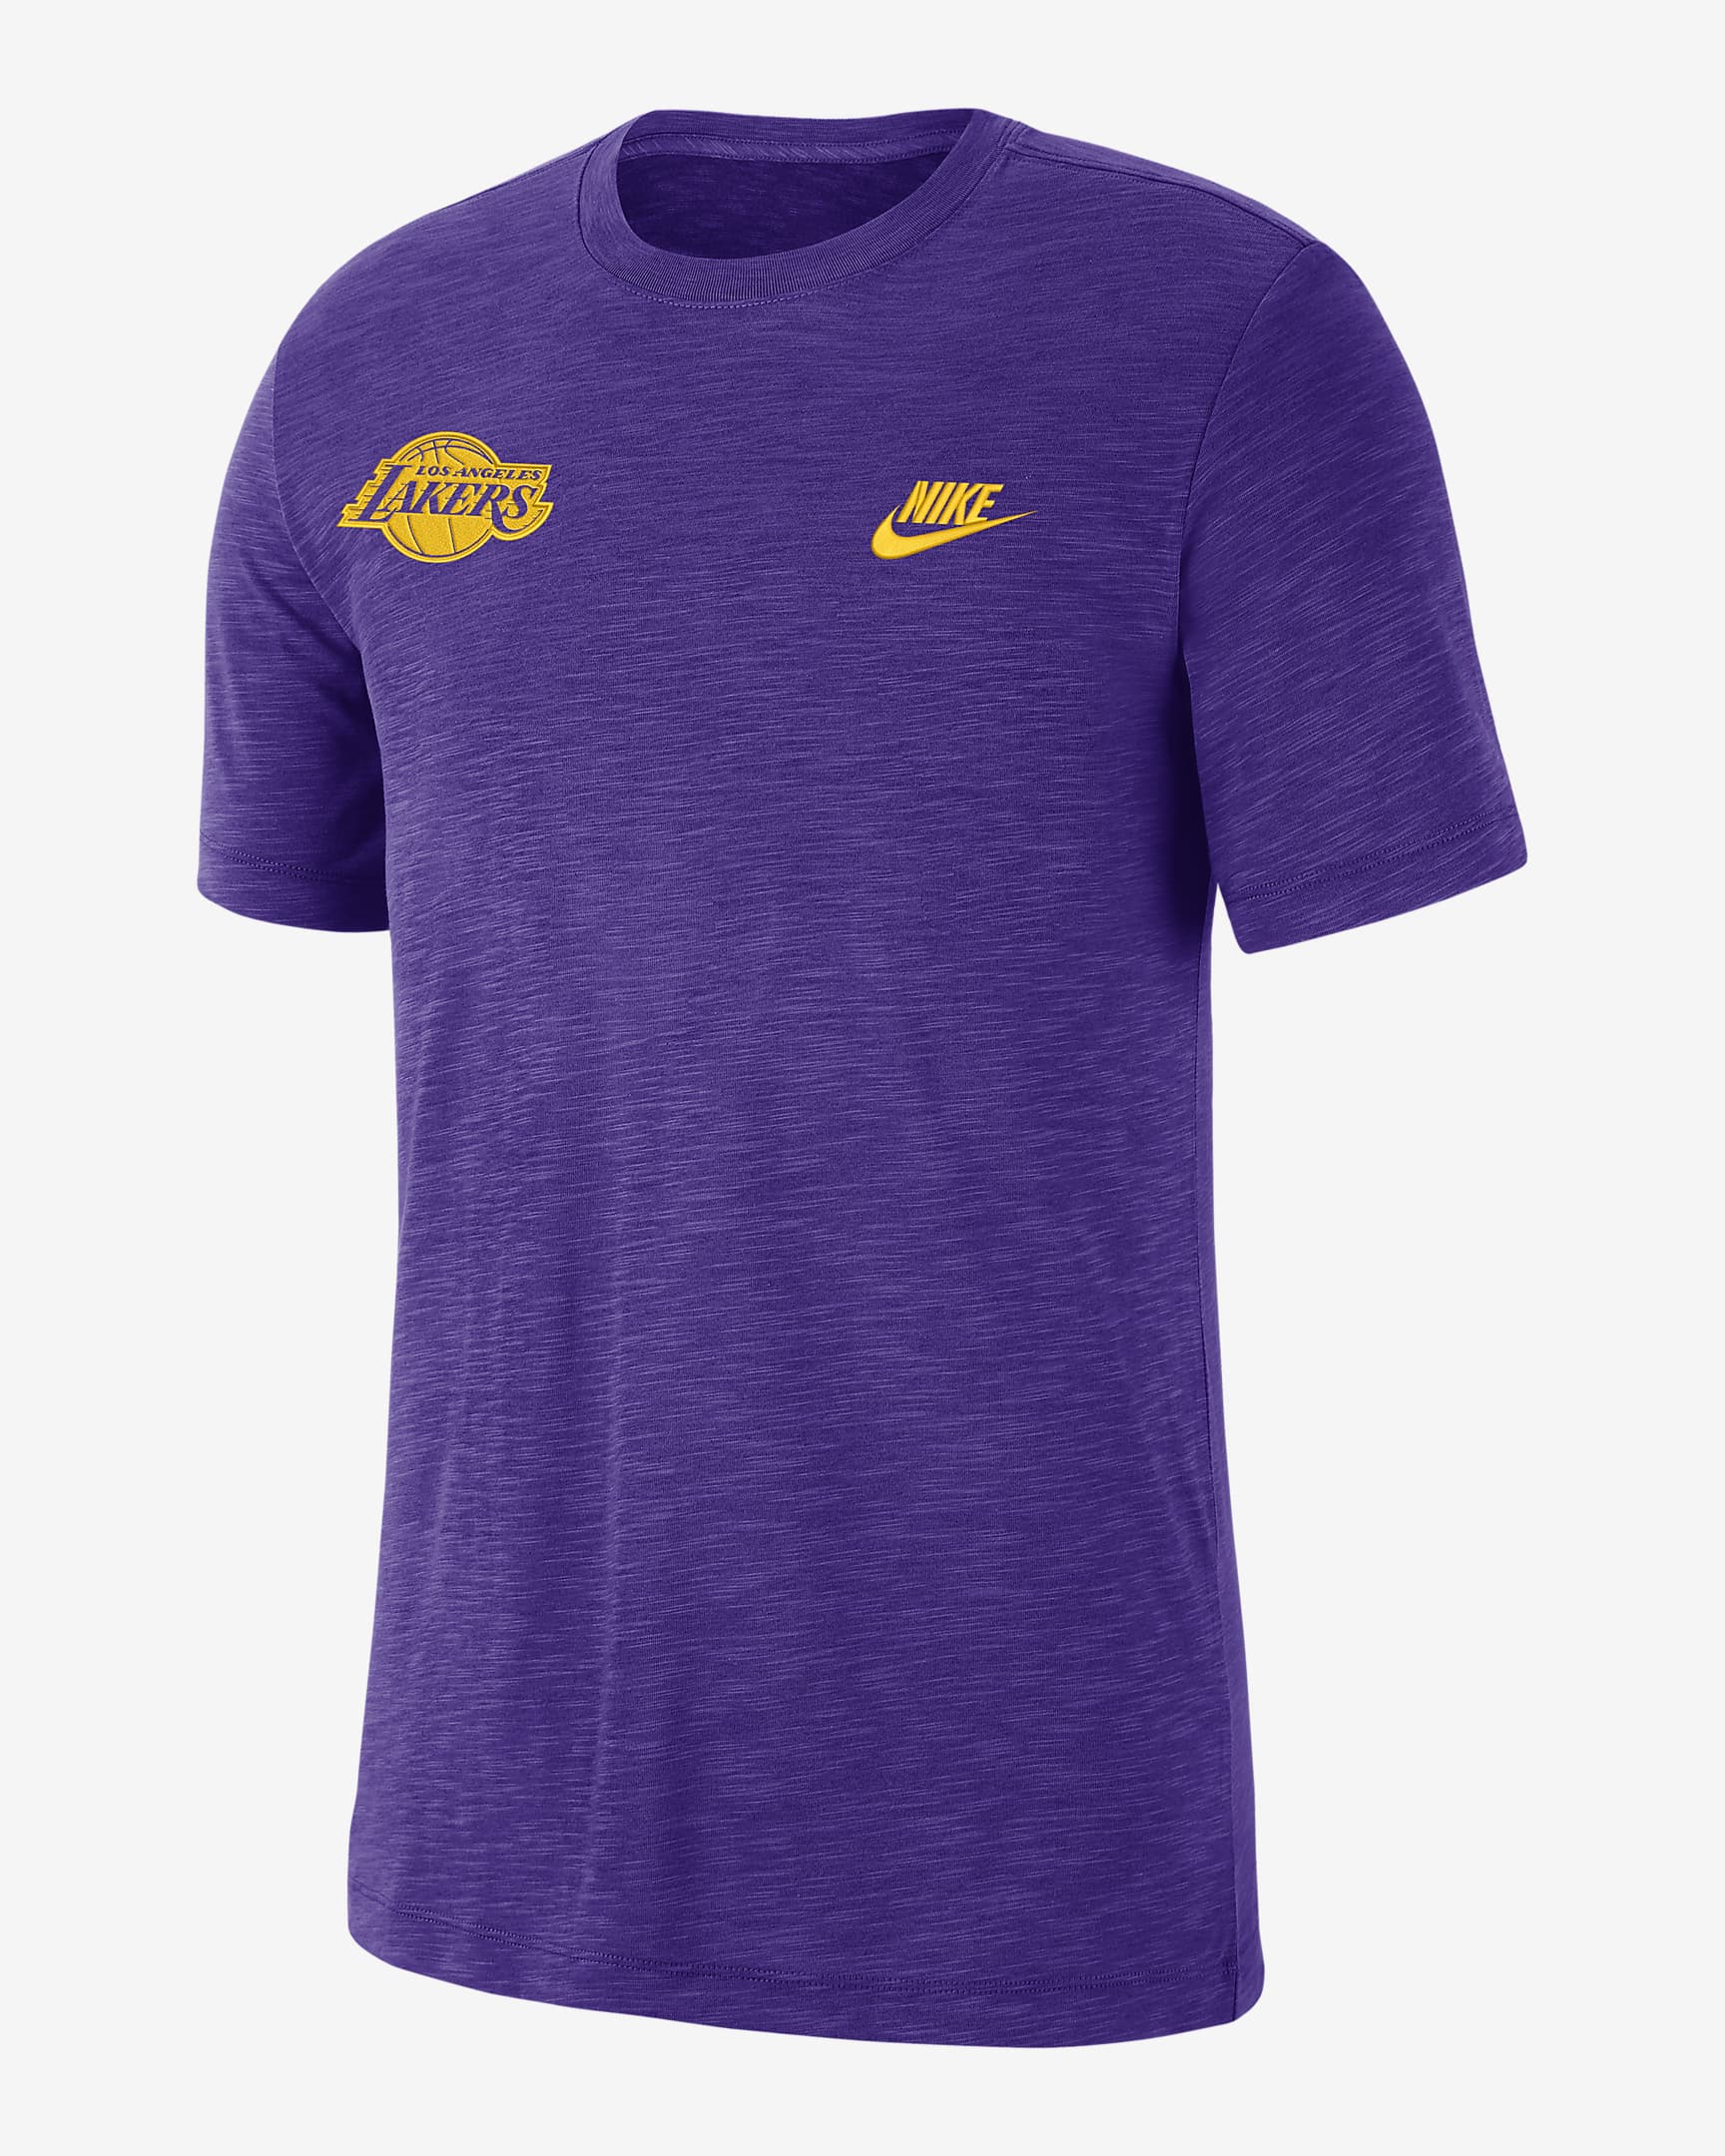 Playera Nike de la NBA para hombre Los Angeles Lakers Essential Club ...